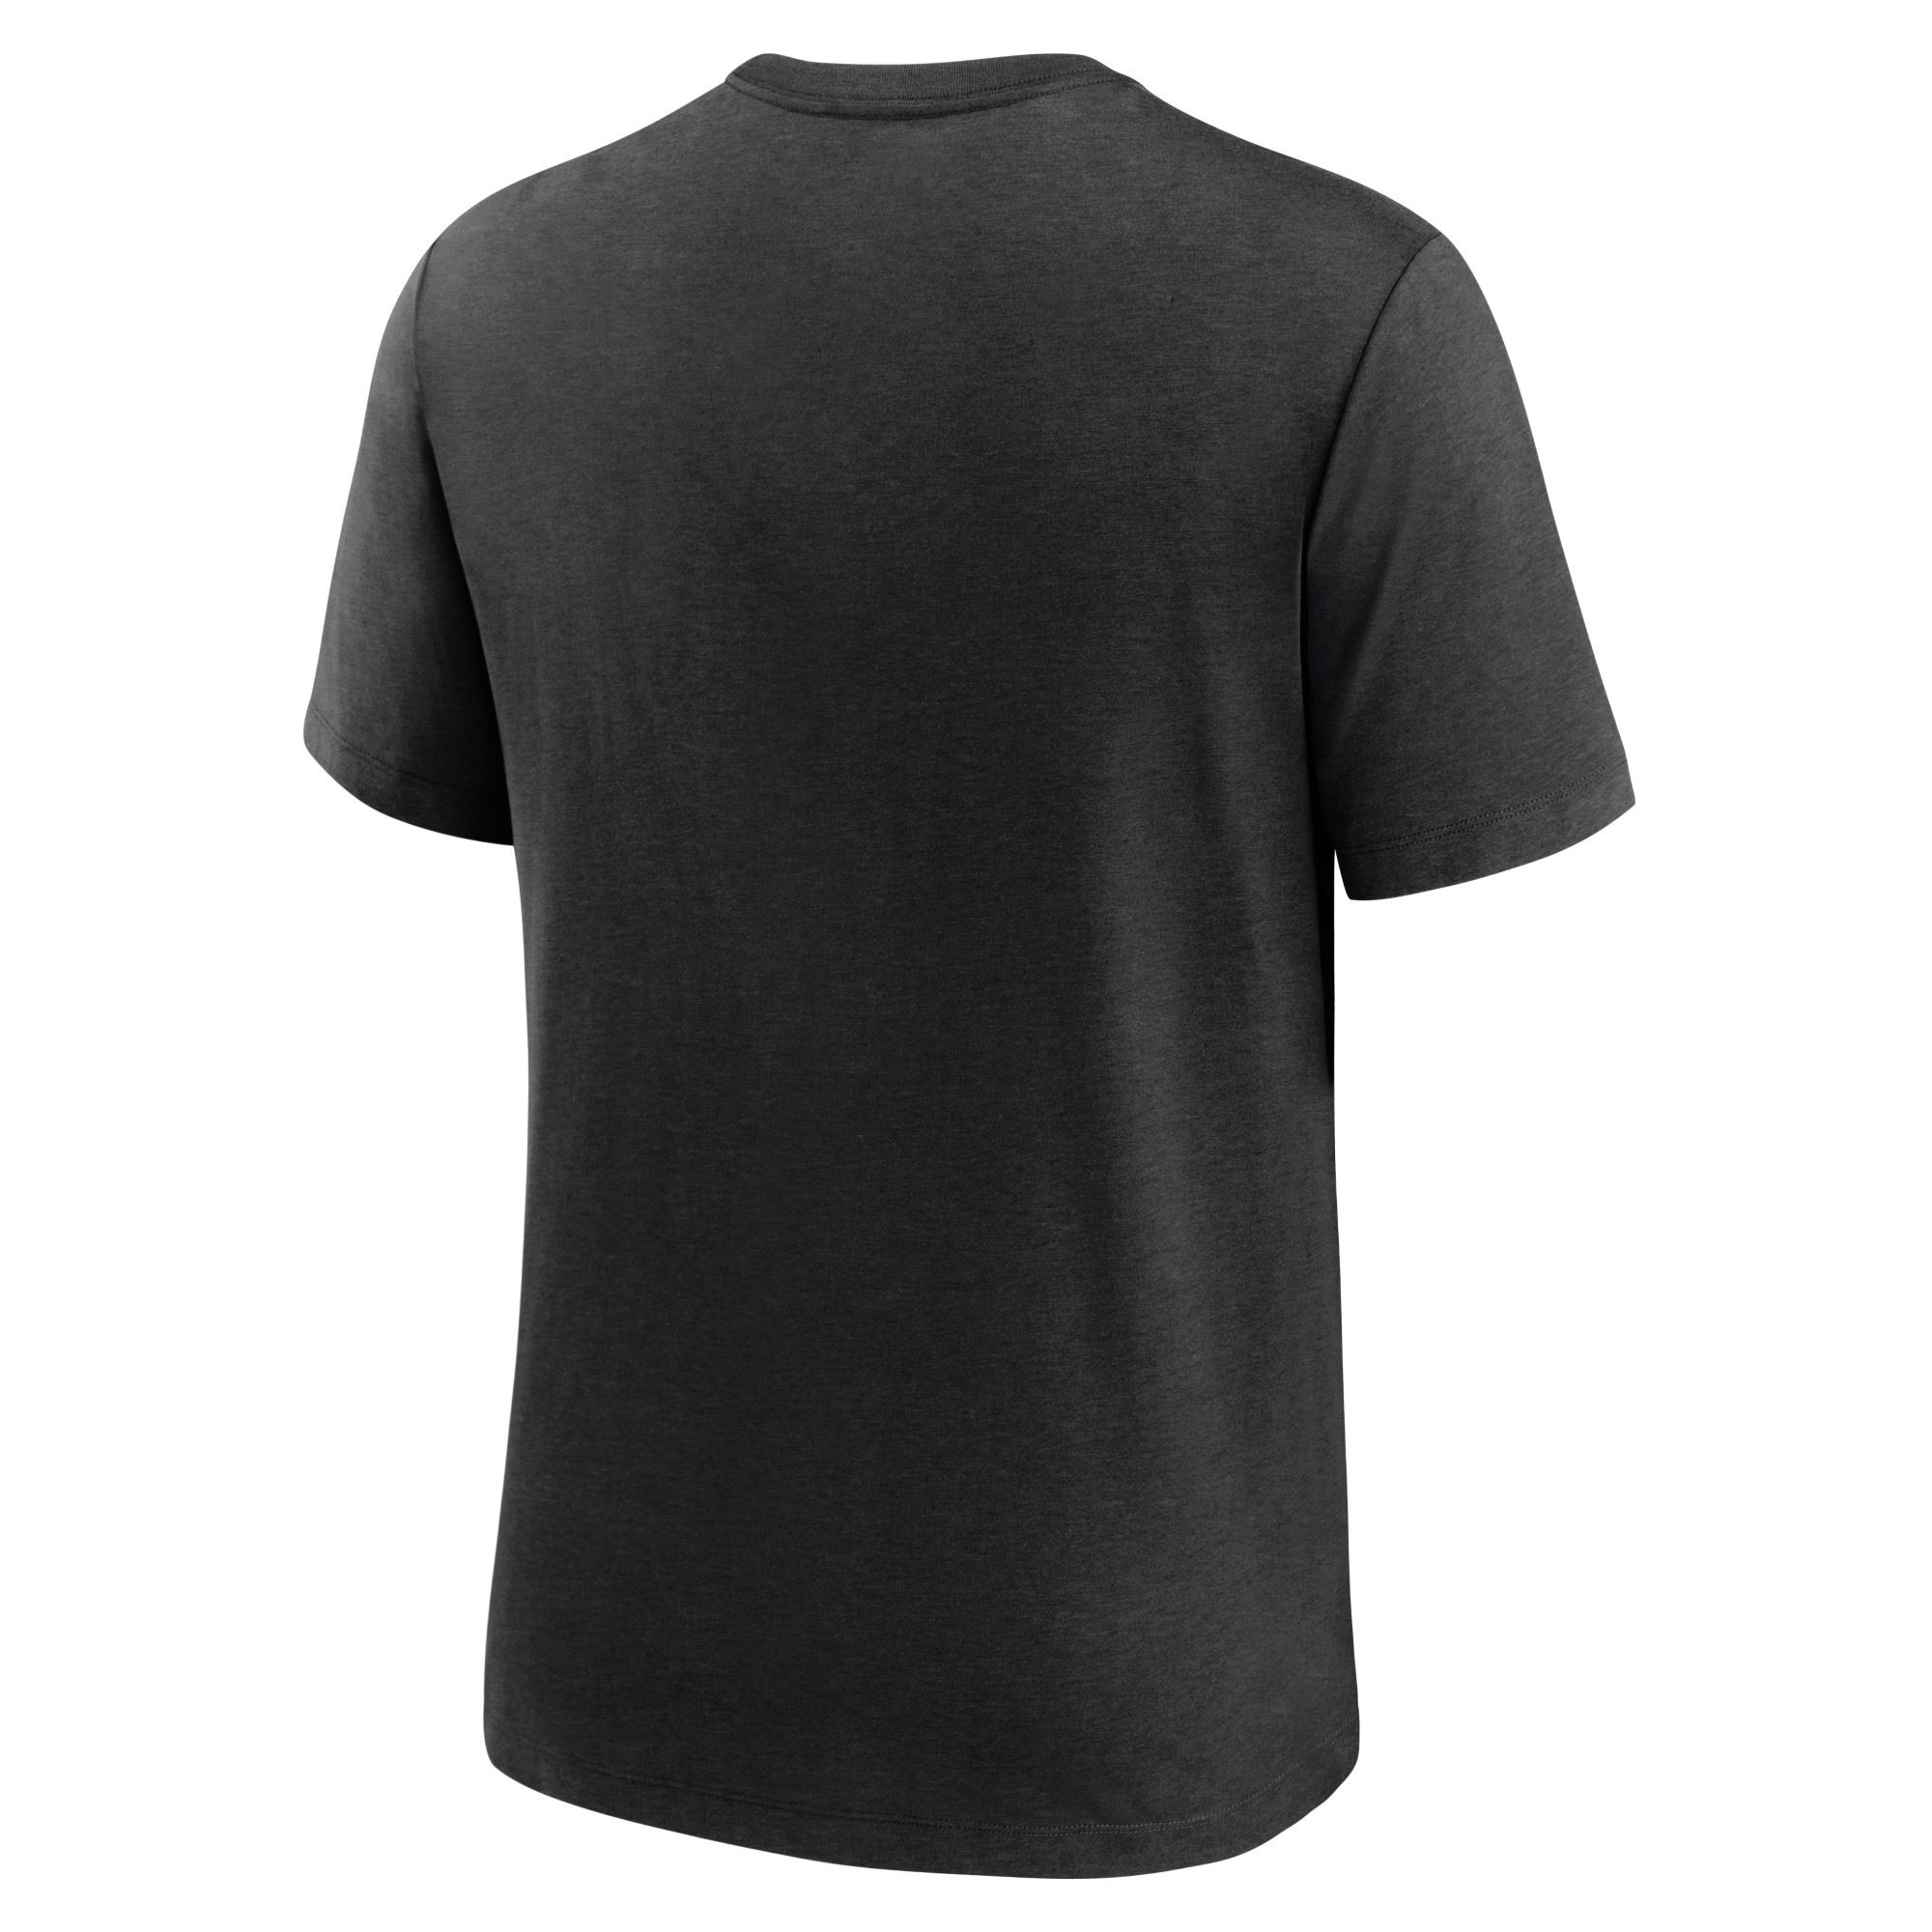 Las Vegas Raiders NFL Triblend Team Name Black Heather T-Shirt Nike